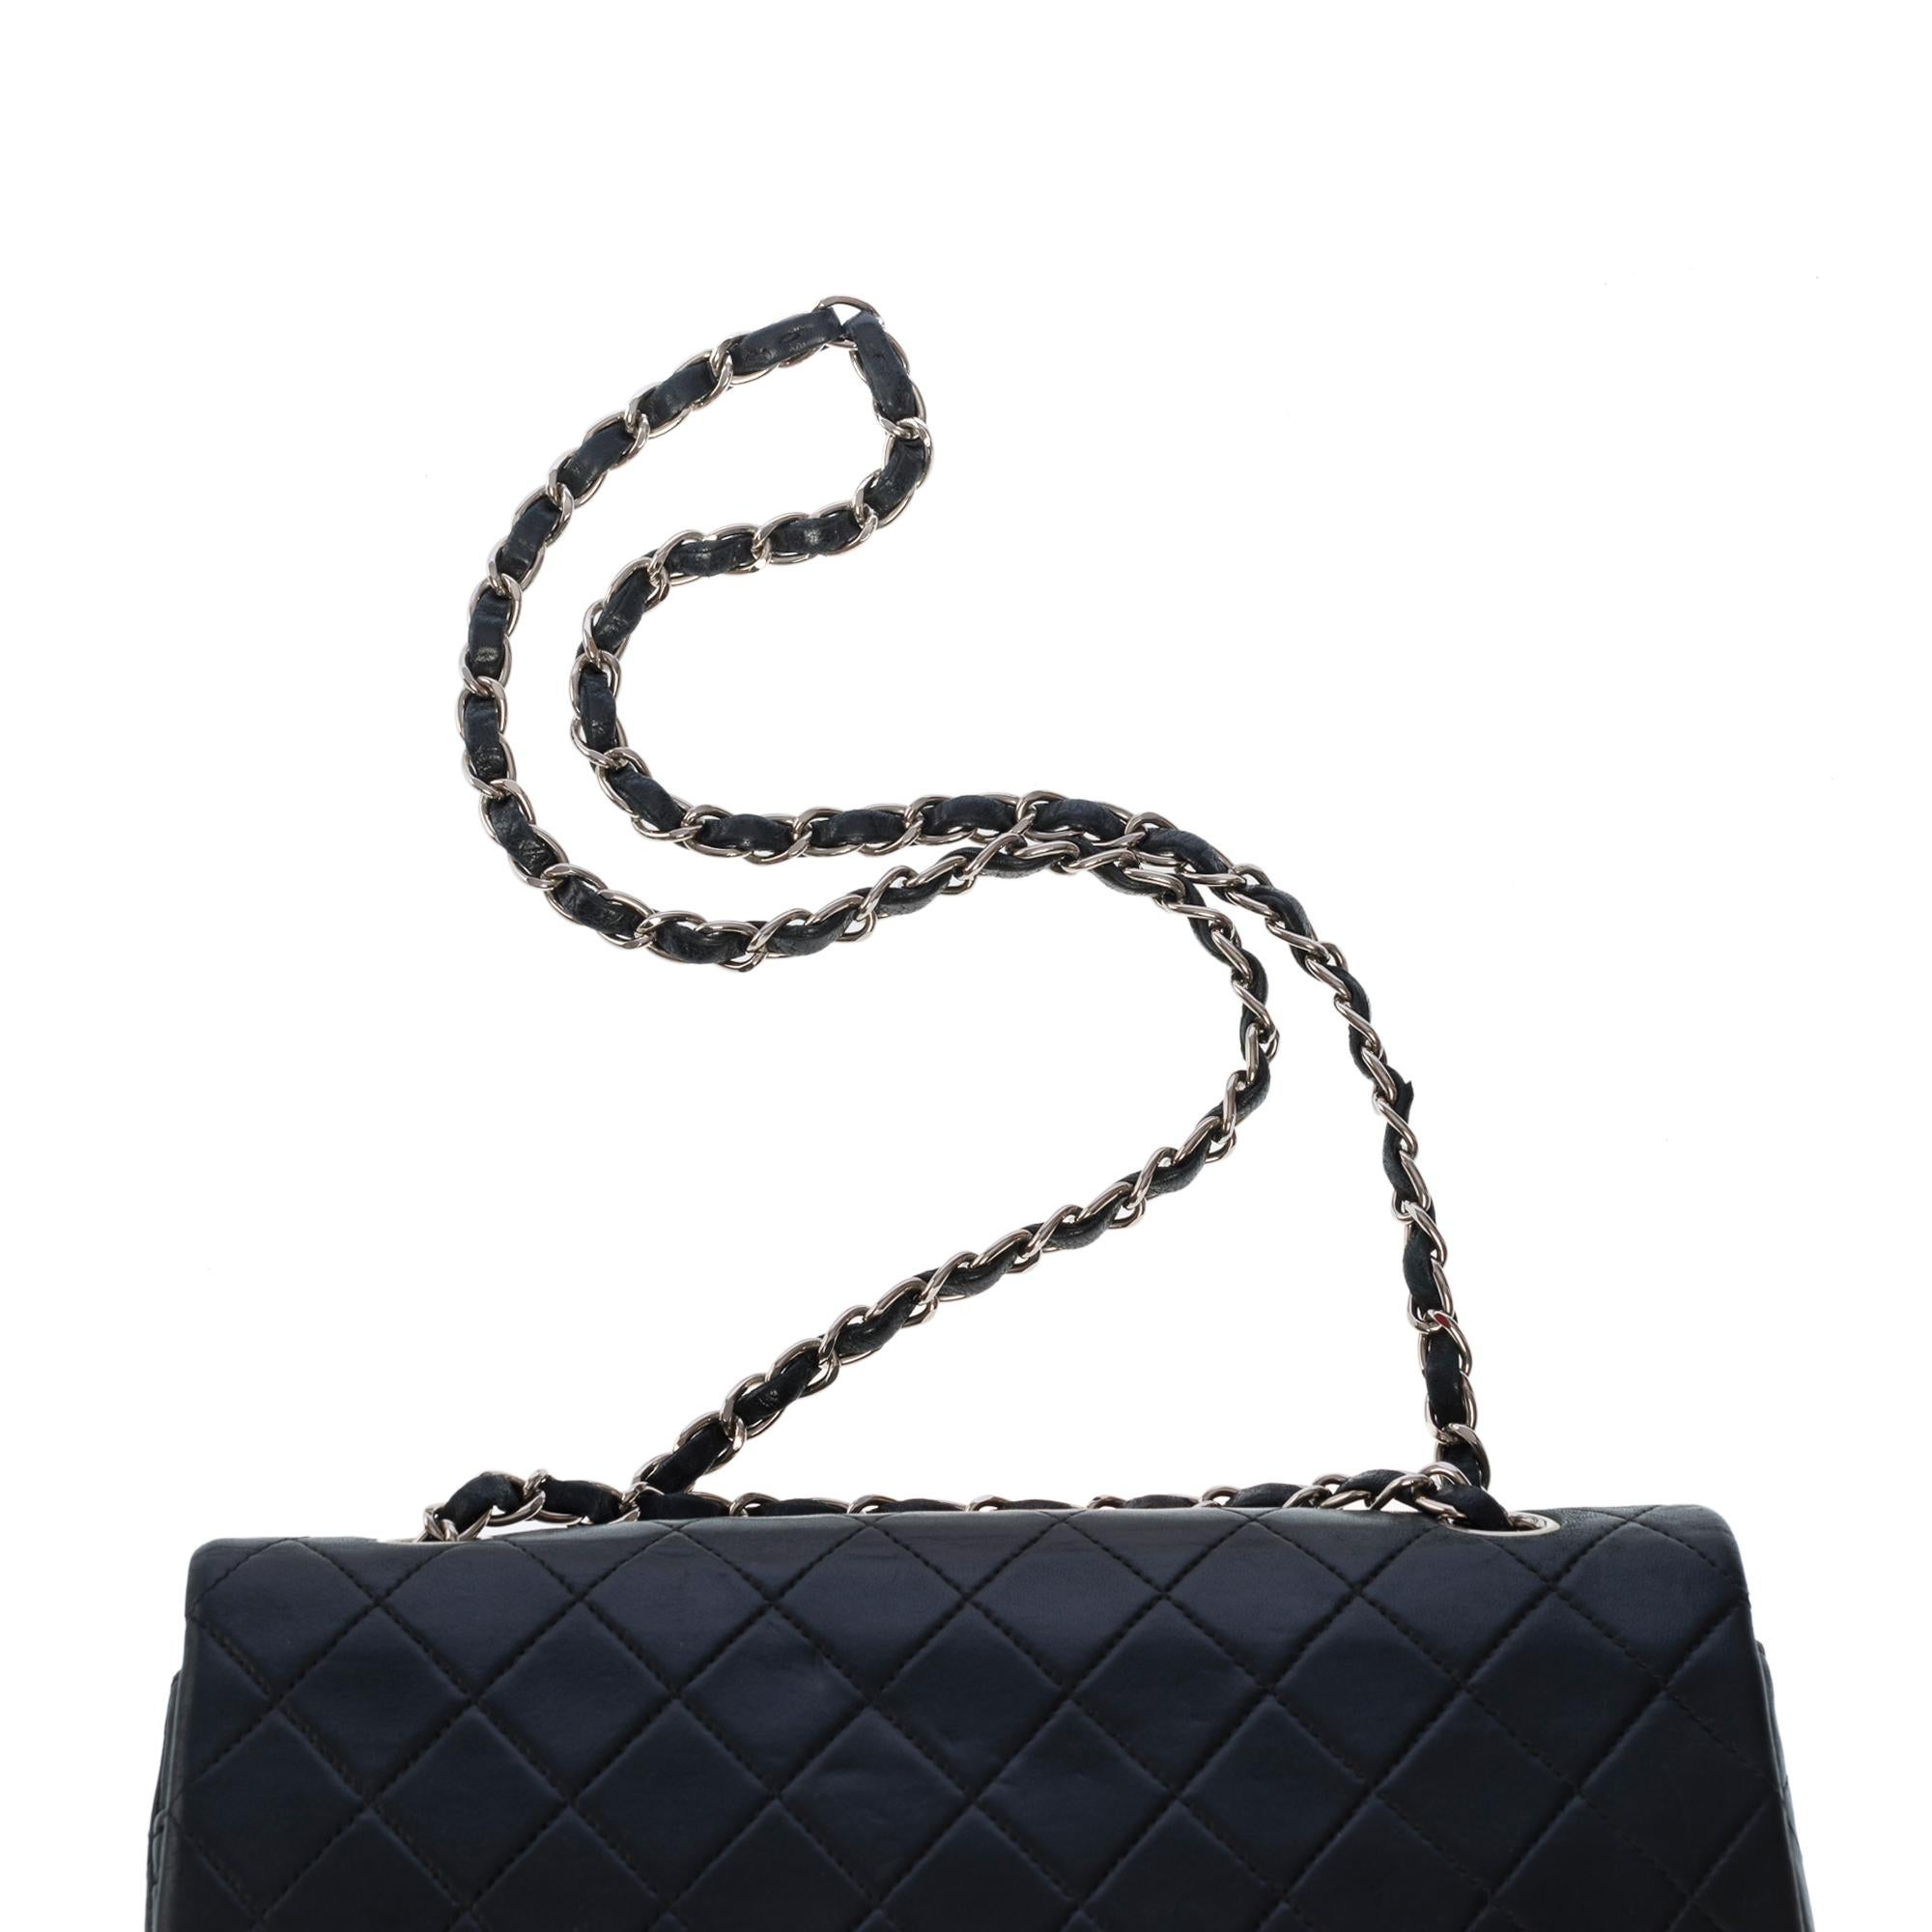 Chanel Timeless Medium 25cm double flap shoulder bag in black lambskin, SHW 3